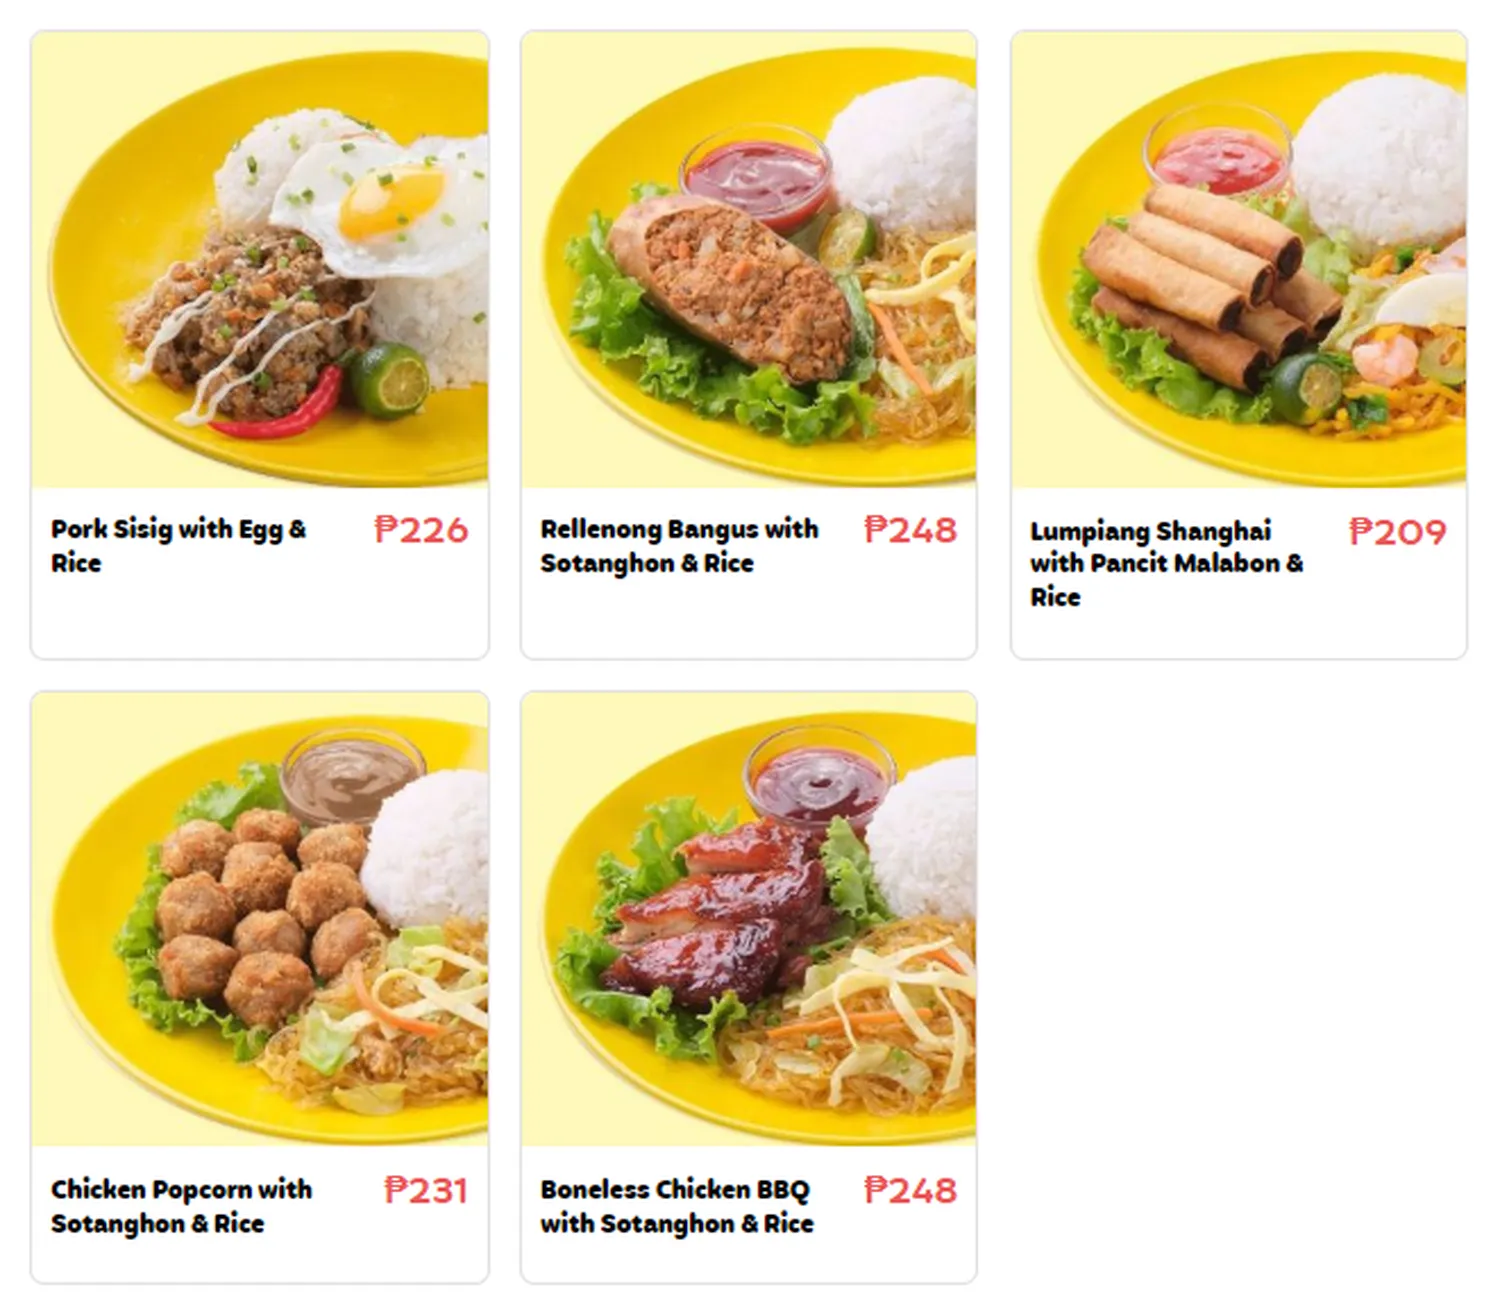 goldilocks menu philippine combo deals